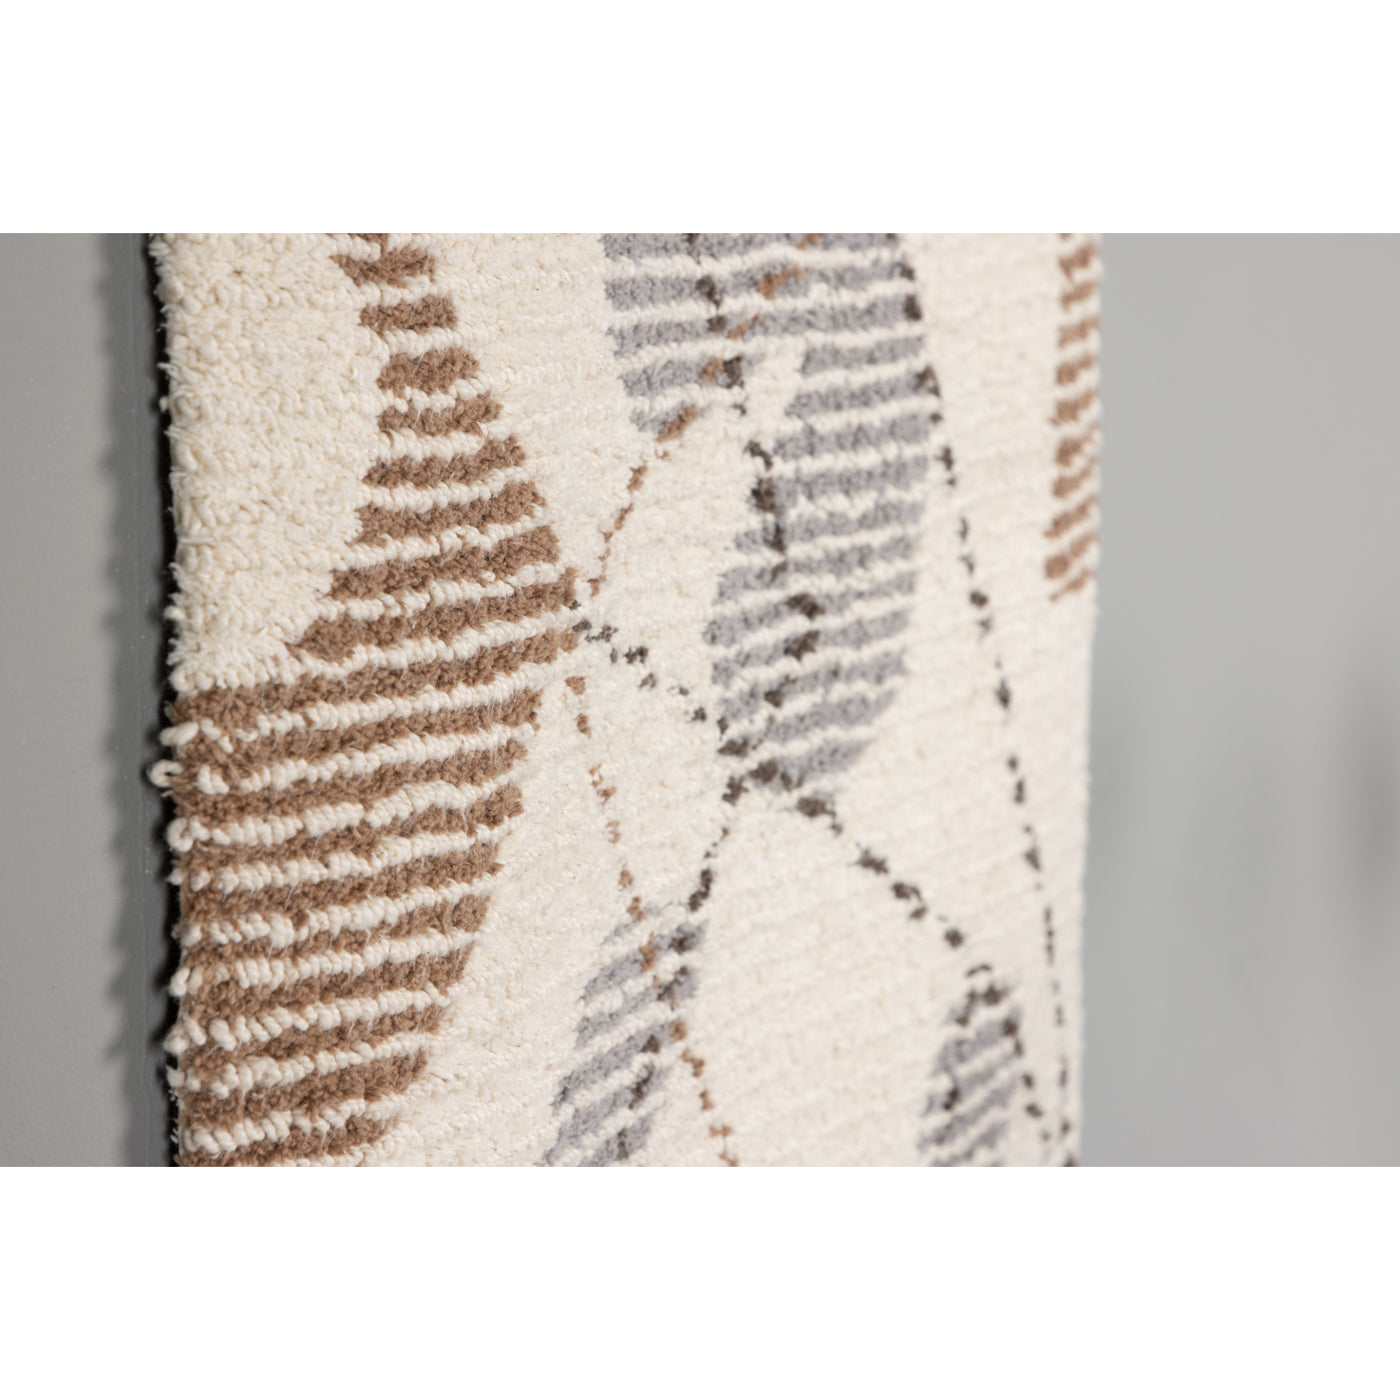 Lill Wandbehang aus Baumwolle – 50 x 80 – rechteckig – Elfenbein/Braun/Grau